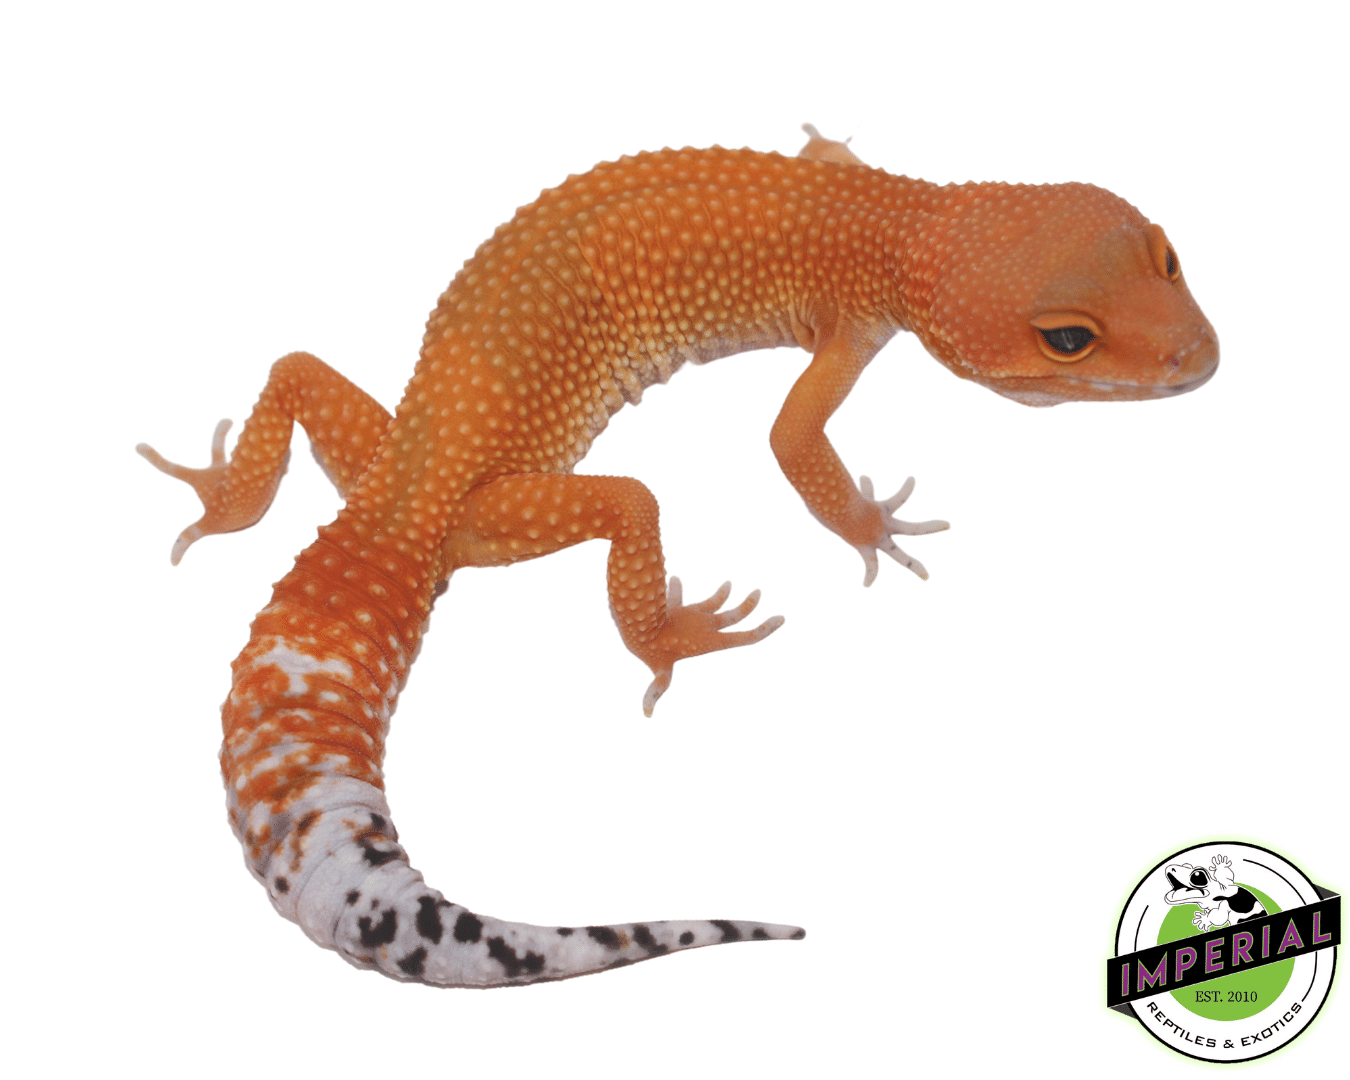 og tangerine leopard gecko for sale, buy reptiles online